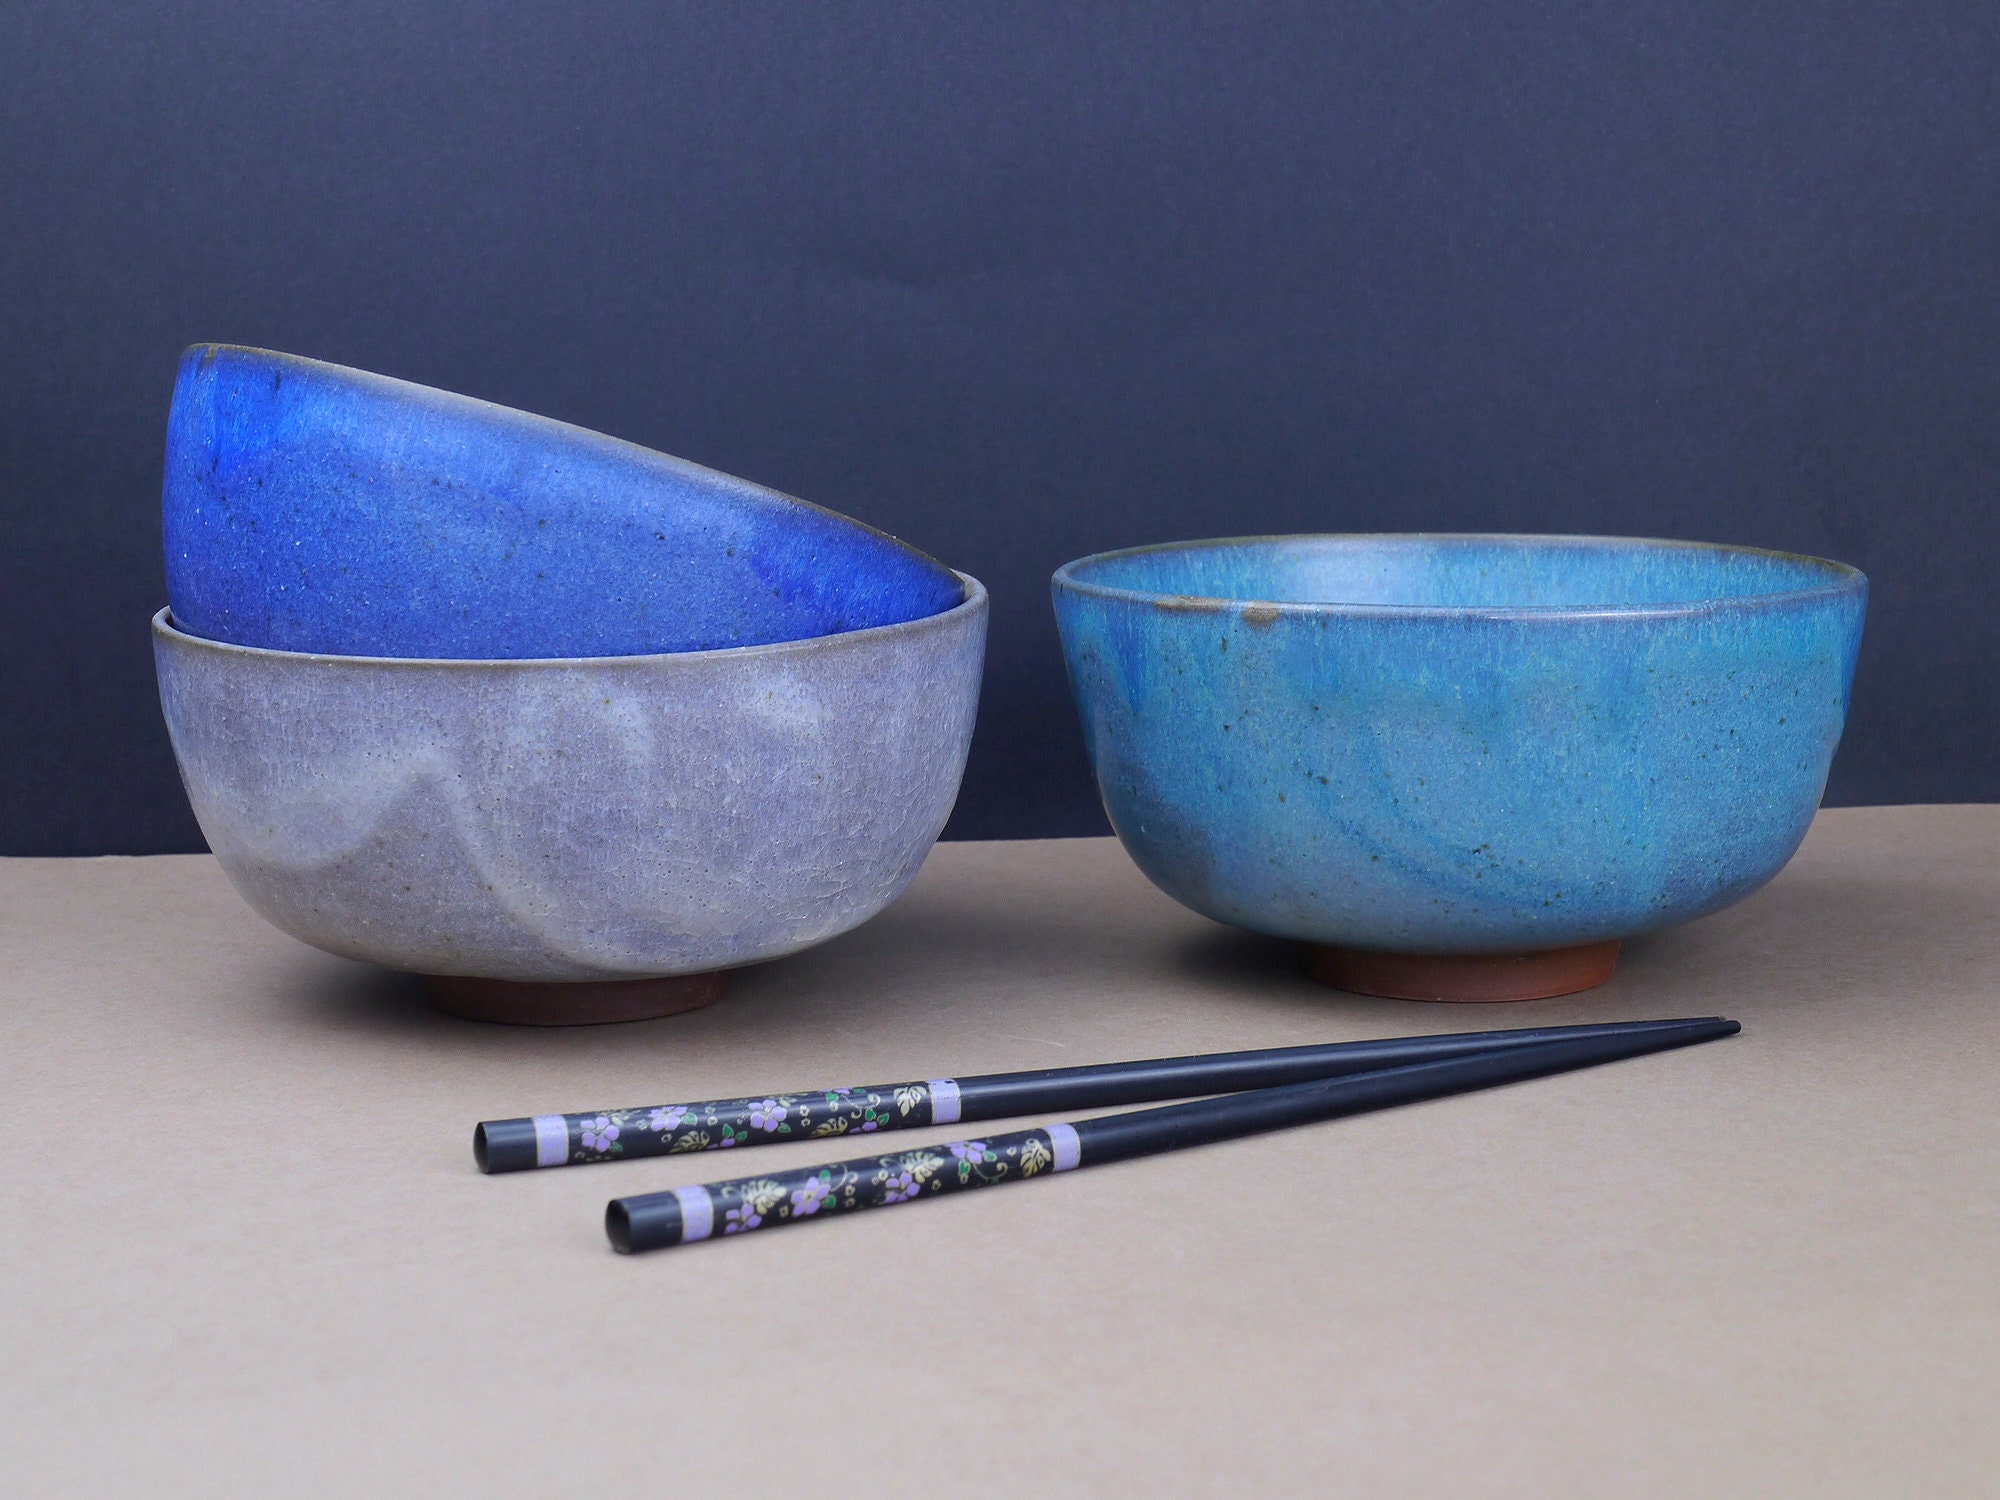 Ramen Bowl. Handmade Ceramic Bowl For Pasta, Noodles, Rice Or Soups